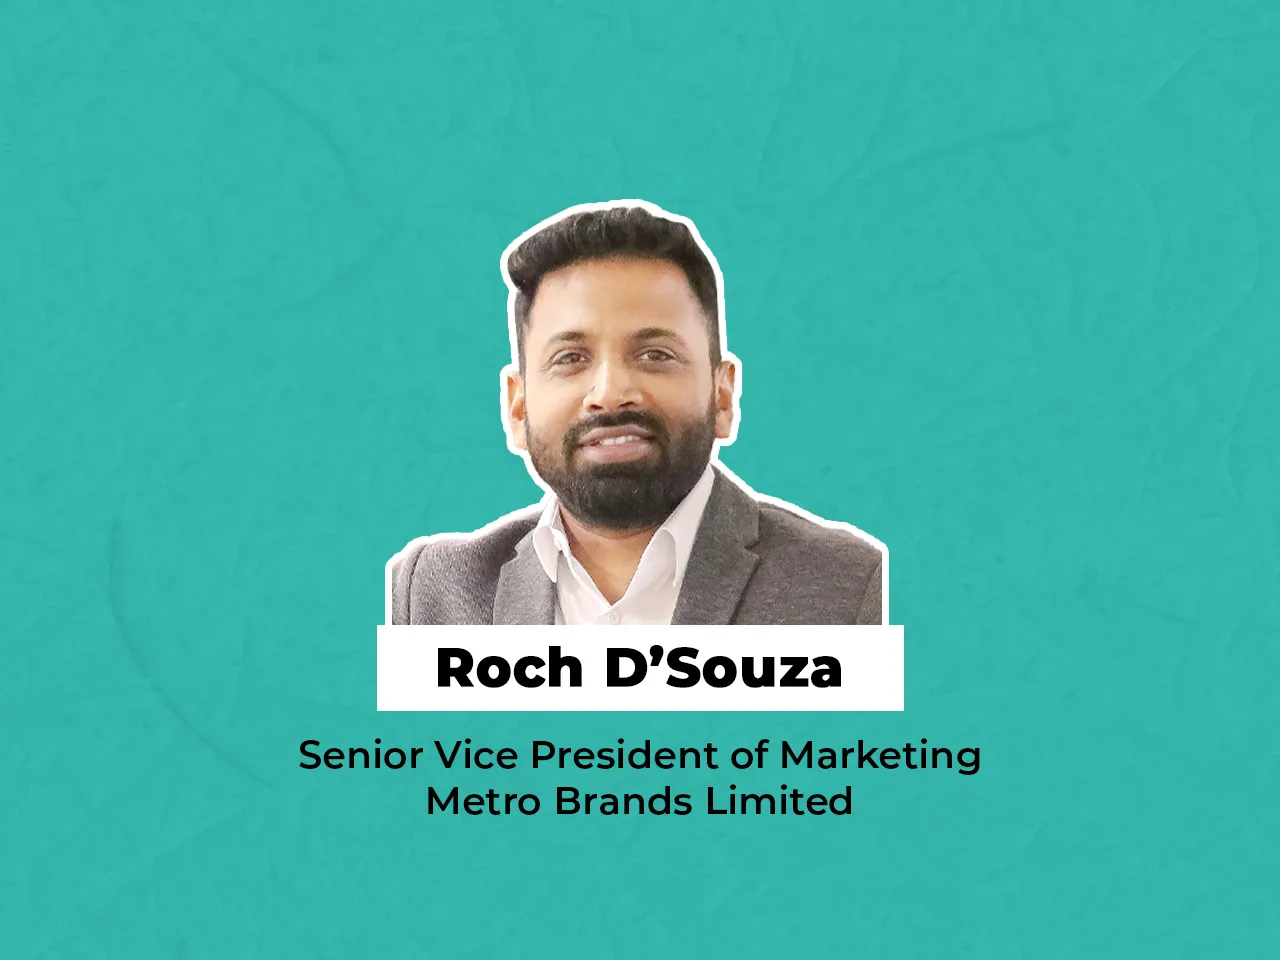 Metro Brands Ltd appoints Roch D’Souza as Senior Vice President of Marketing